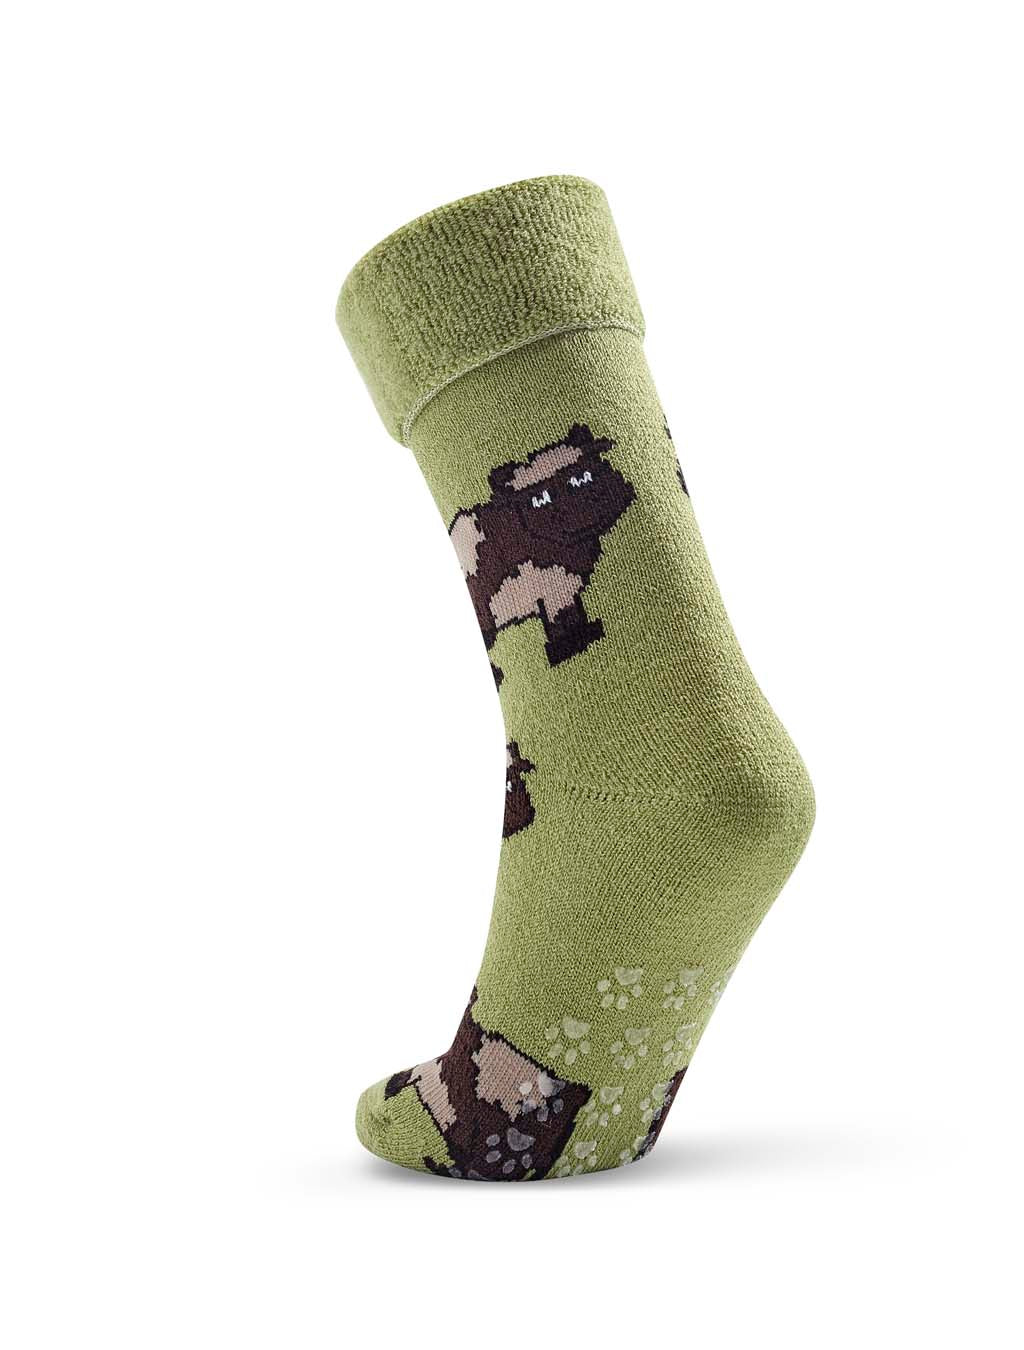 Cow Bed Socks - Emerald